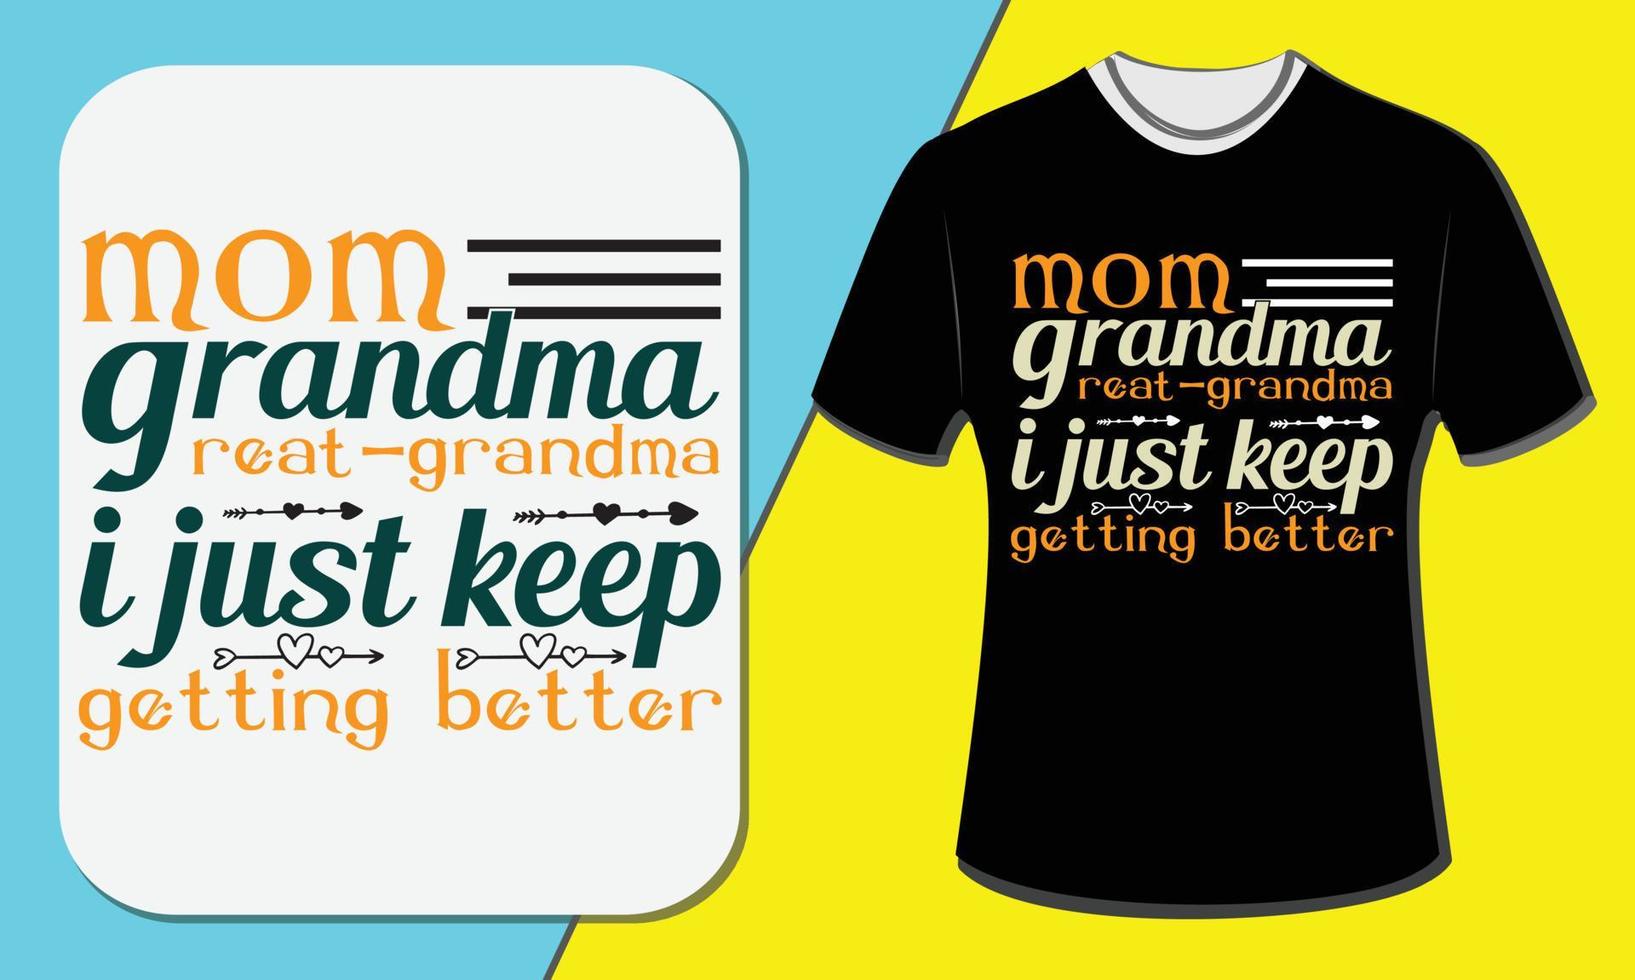 mama oma overgroot oma ik word steeds beter, t-shirt design vector